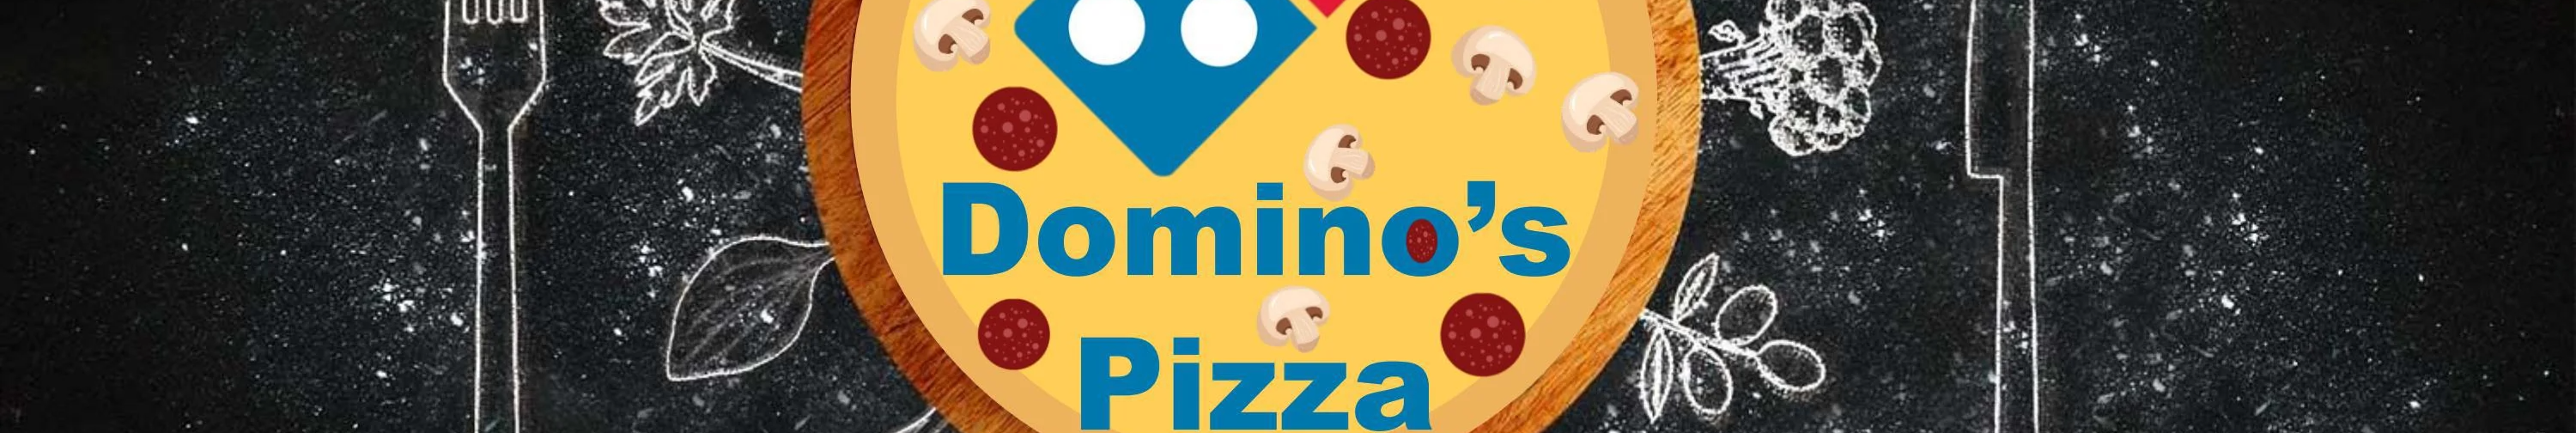 Domino's Pizza LLC background